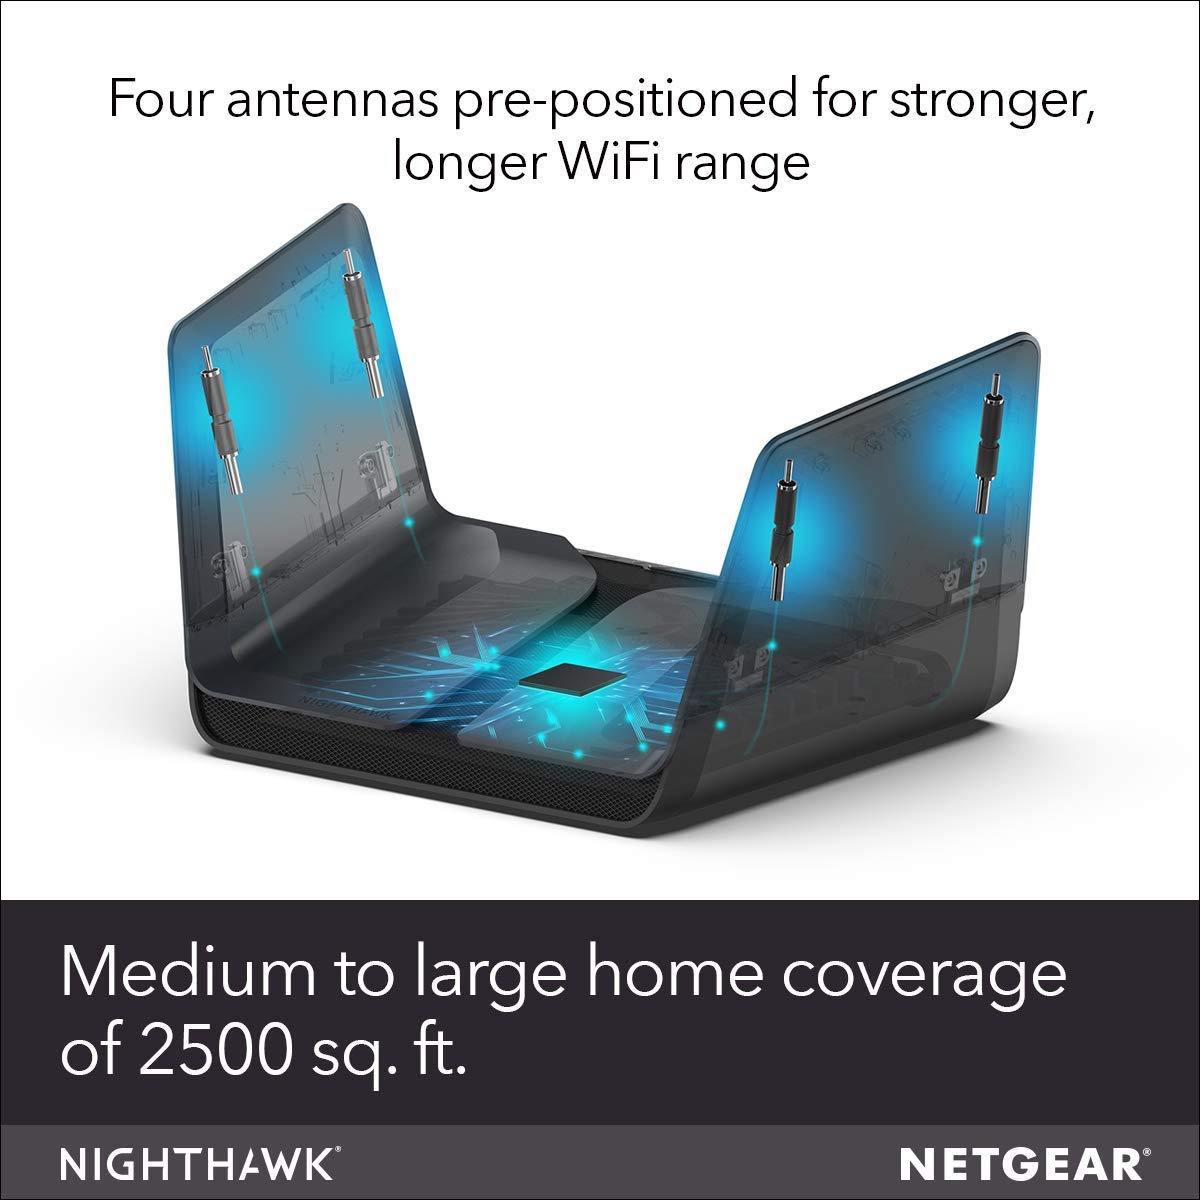 NETGEAR RAX80-100NAR Nighthawk AX8 8-Stream WiFi 6 Router - Certified Refurbished